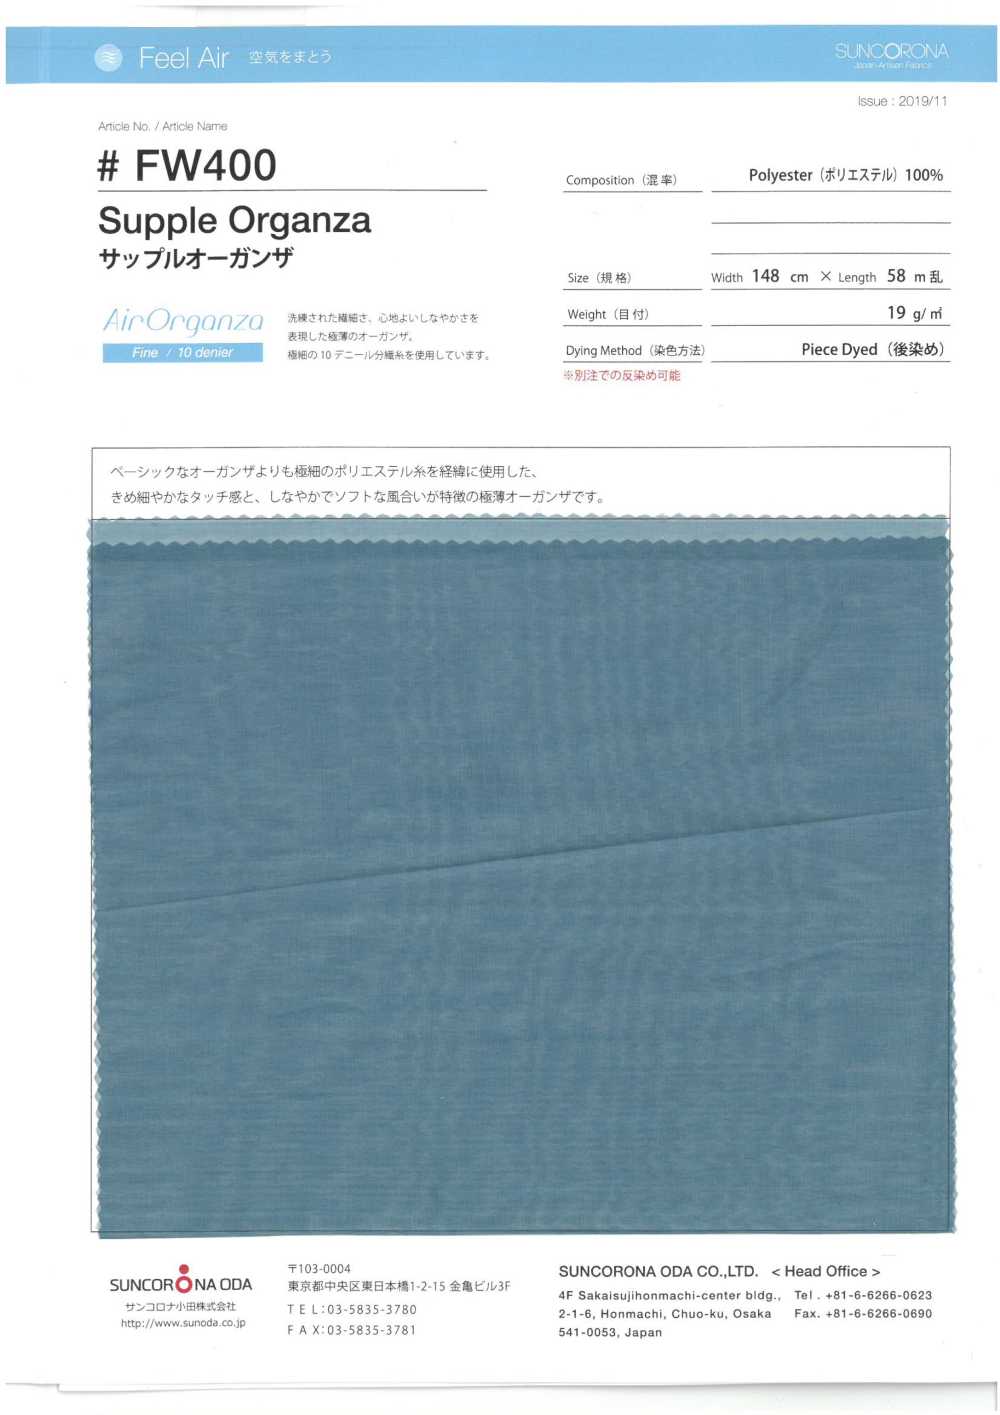 FW400 Sapple Organza[Textile / Fabric] Suncorona Oda